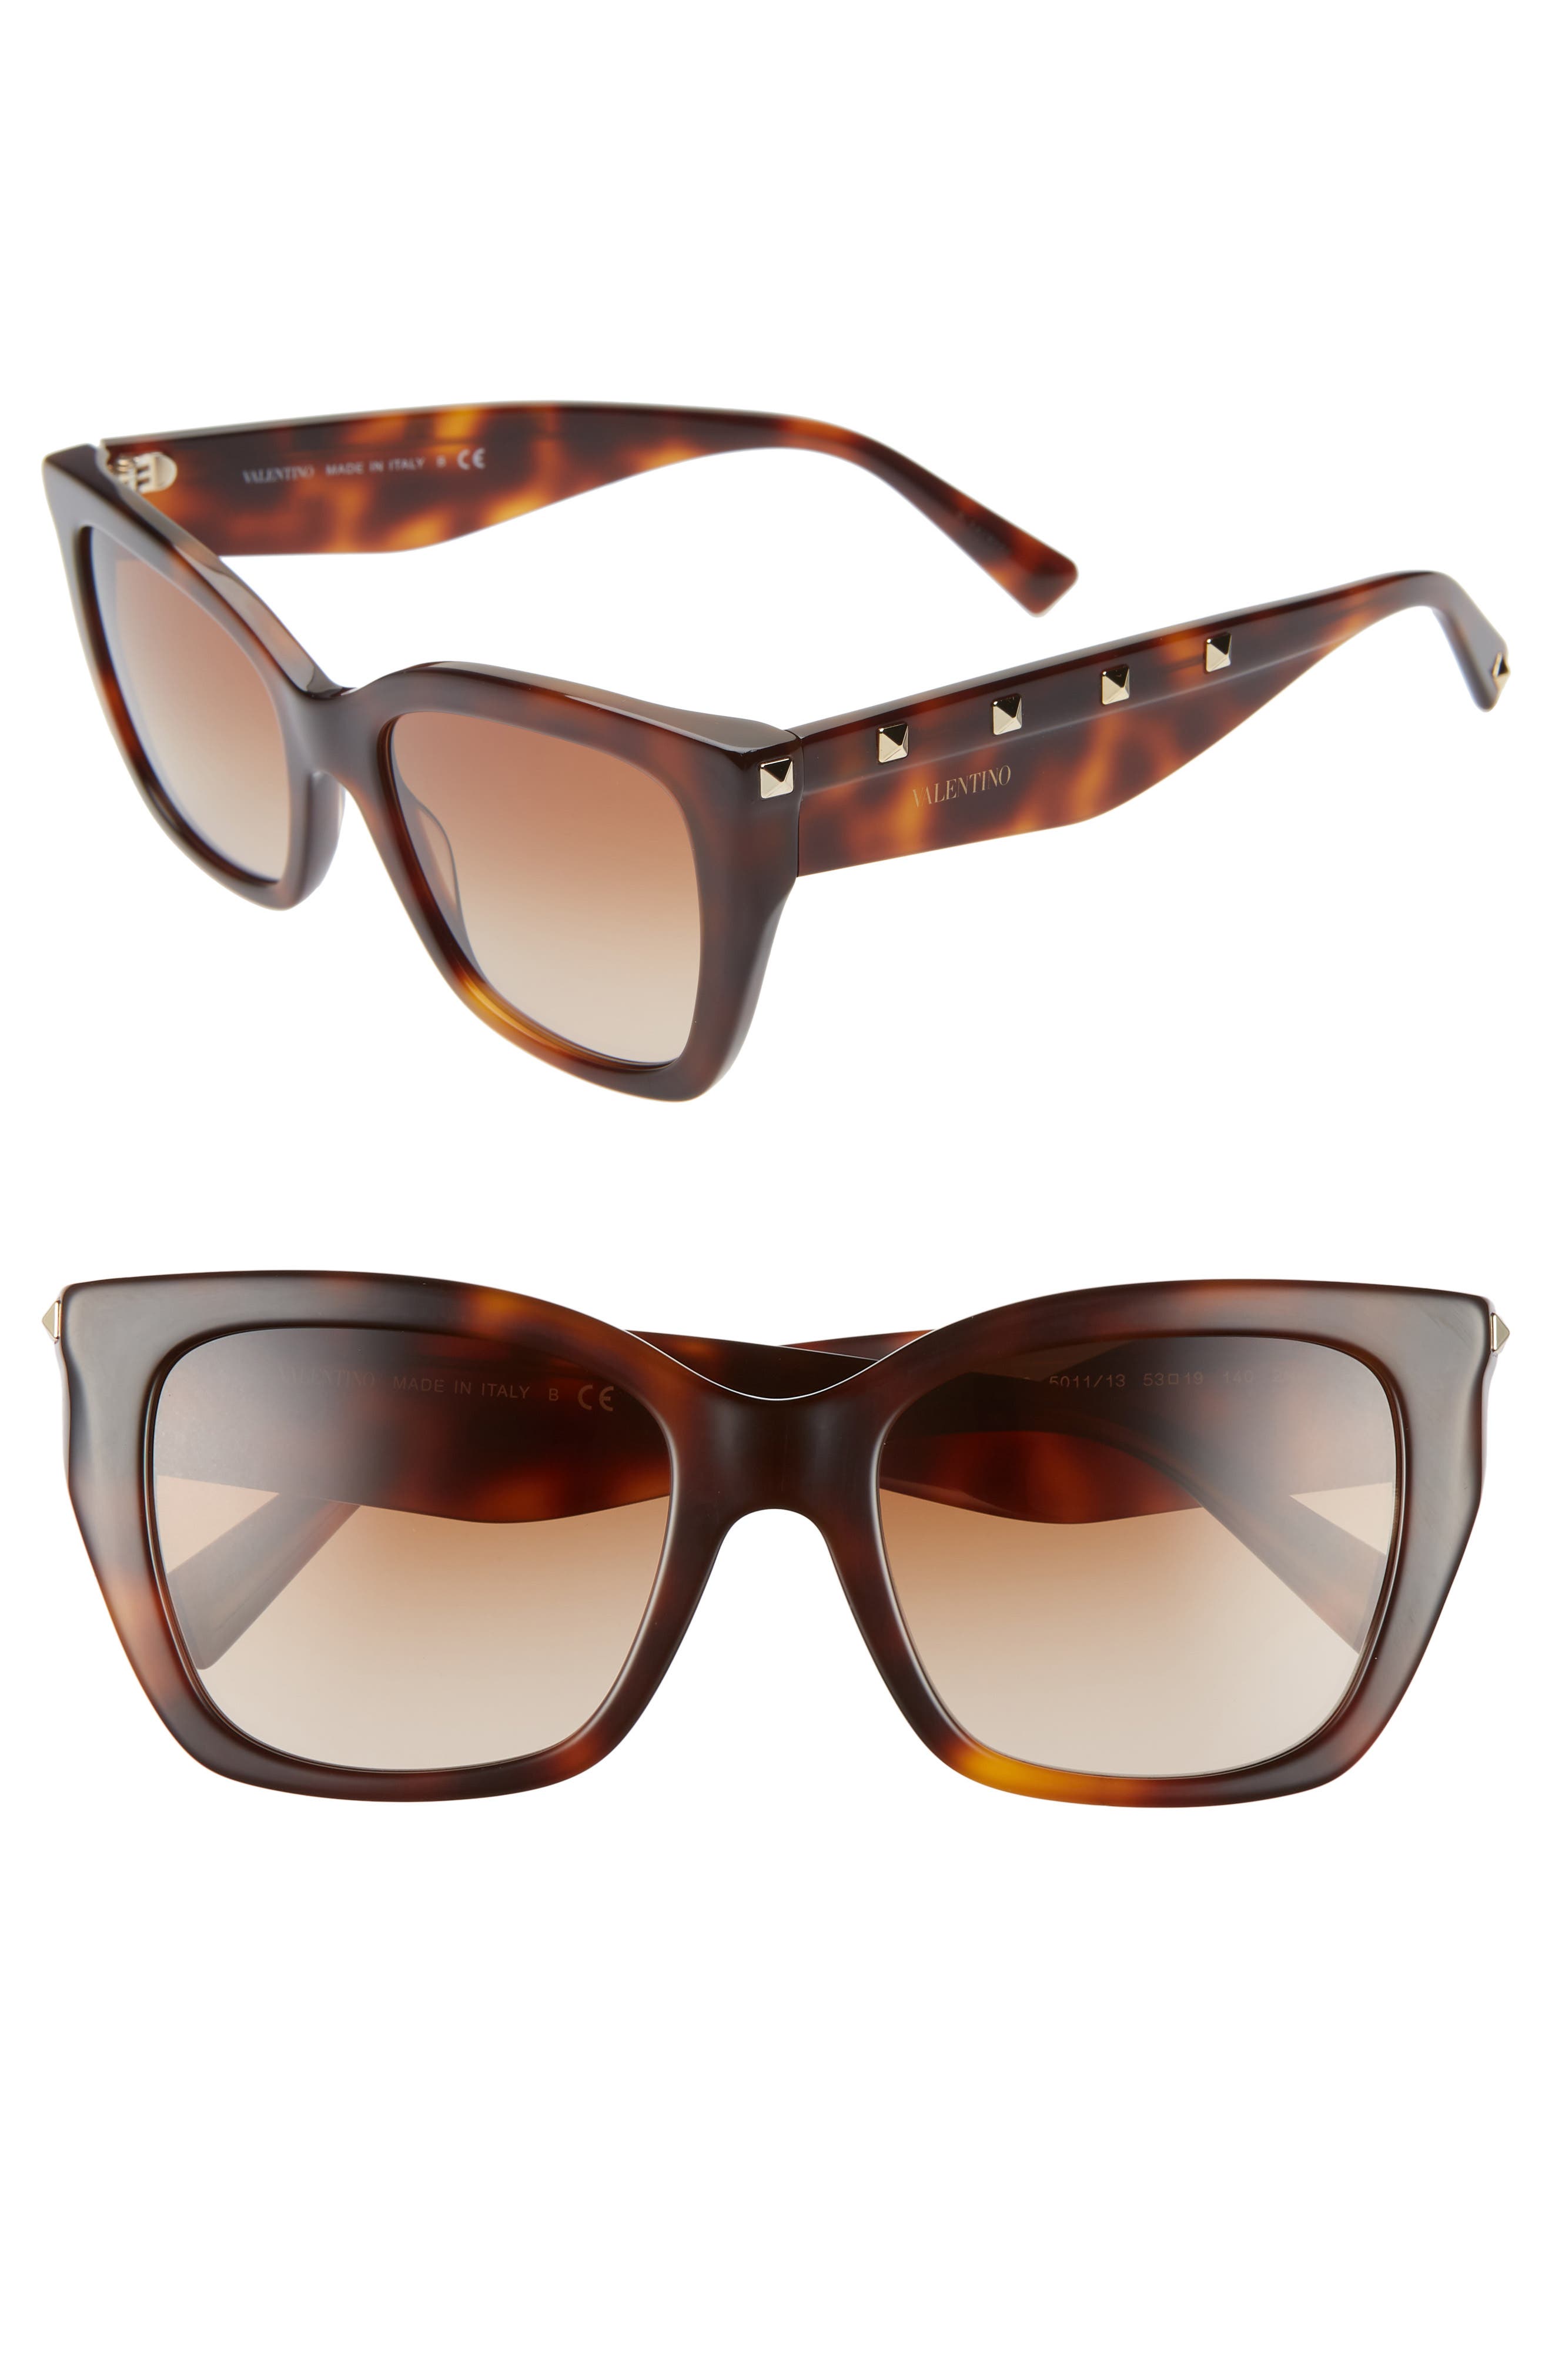 Valentino 53mm Rockstud Cat Eye Sunglasses in Brown/Havana at Nordstrom